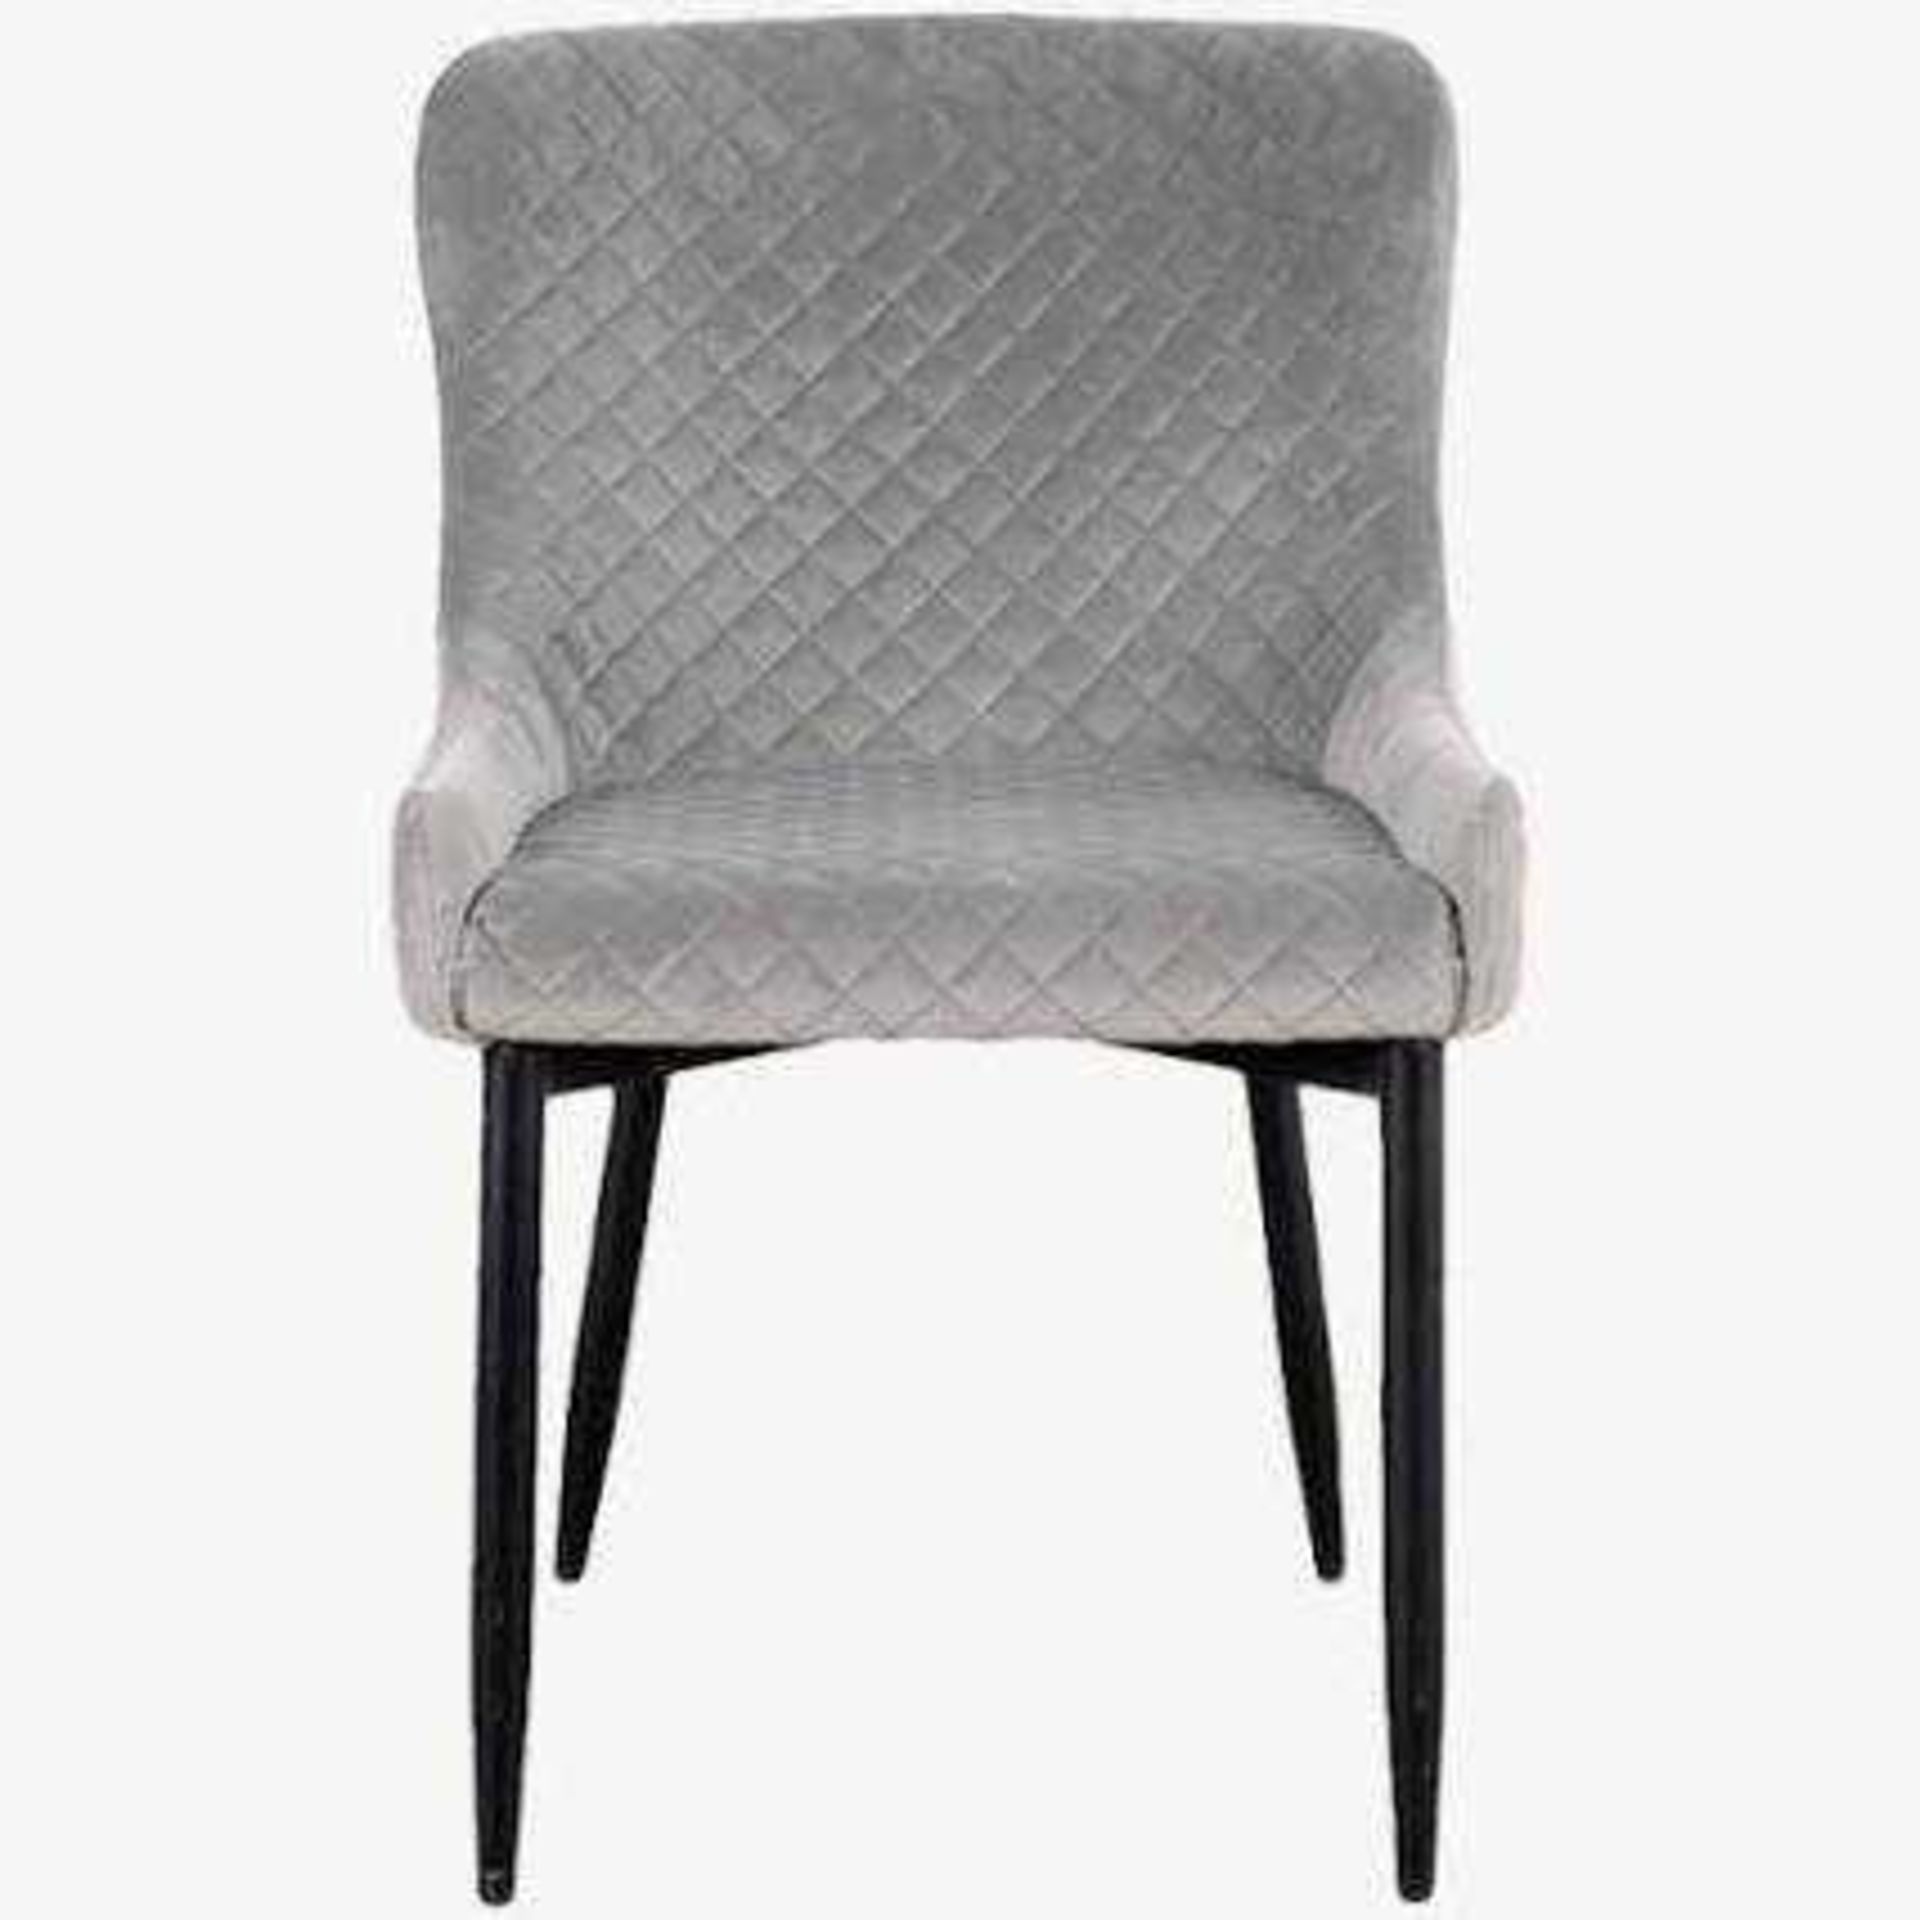 RRP £200, Arighi Bianci Grey And Chrome Chairs